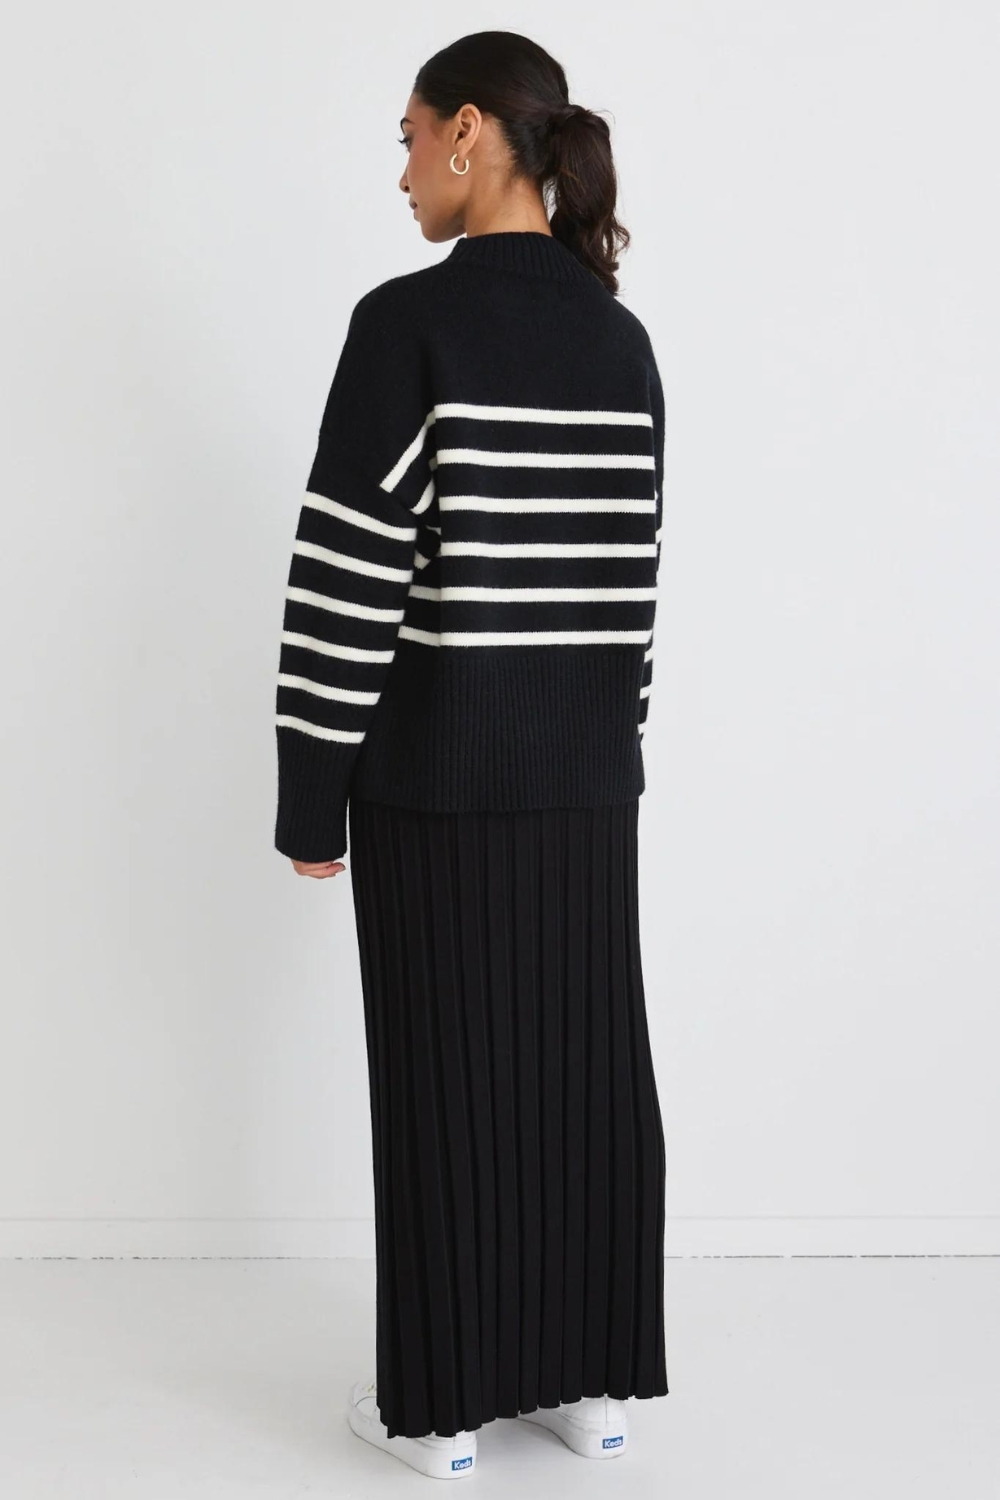 Delilah Black Pleated Knit Maxi Skirt